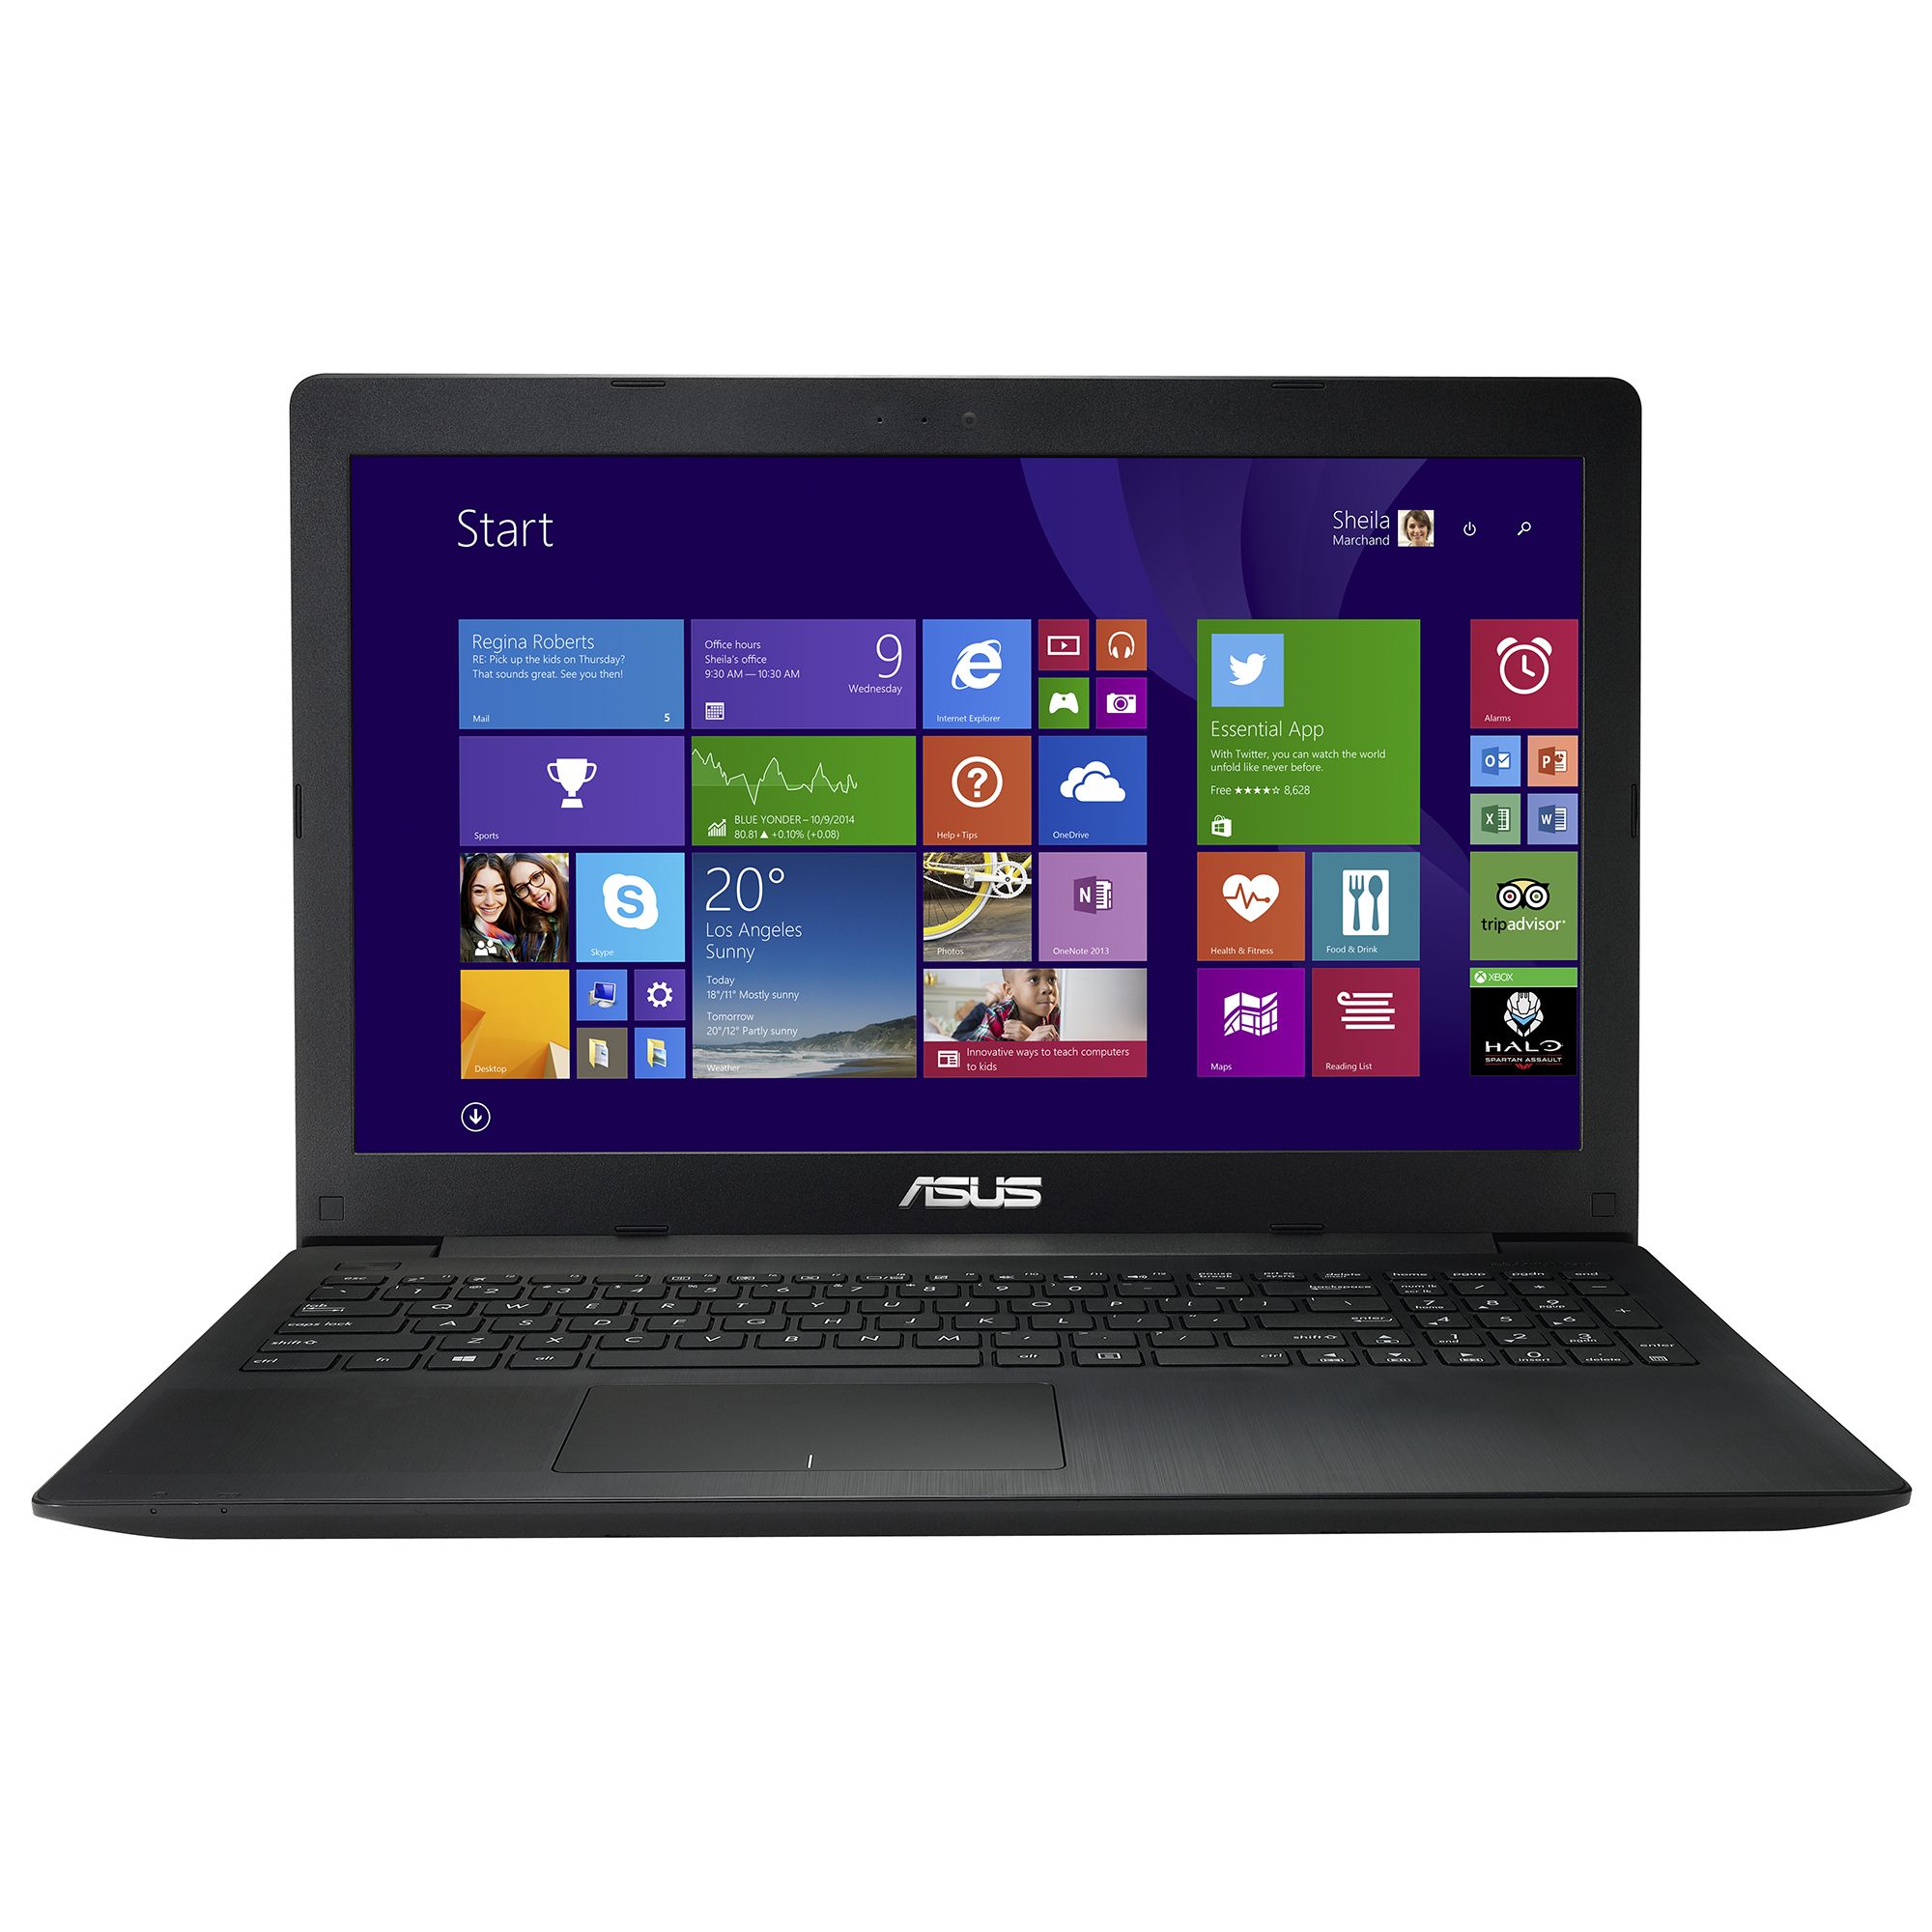  Laptop Asus X553MA-XX898B, Intel CeleronN2830, 4GB DDR3 HDD 500GB, Intel HD Graphics, Windows 8.1 